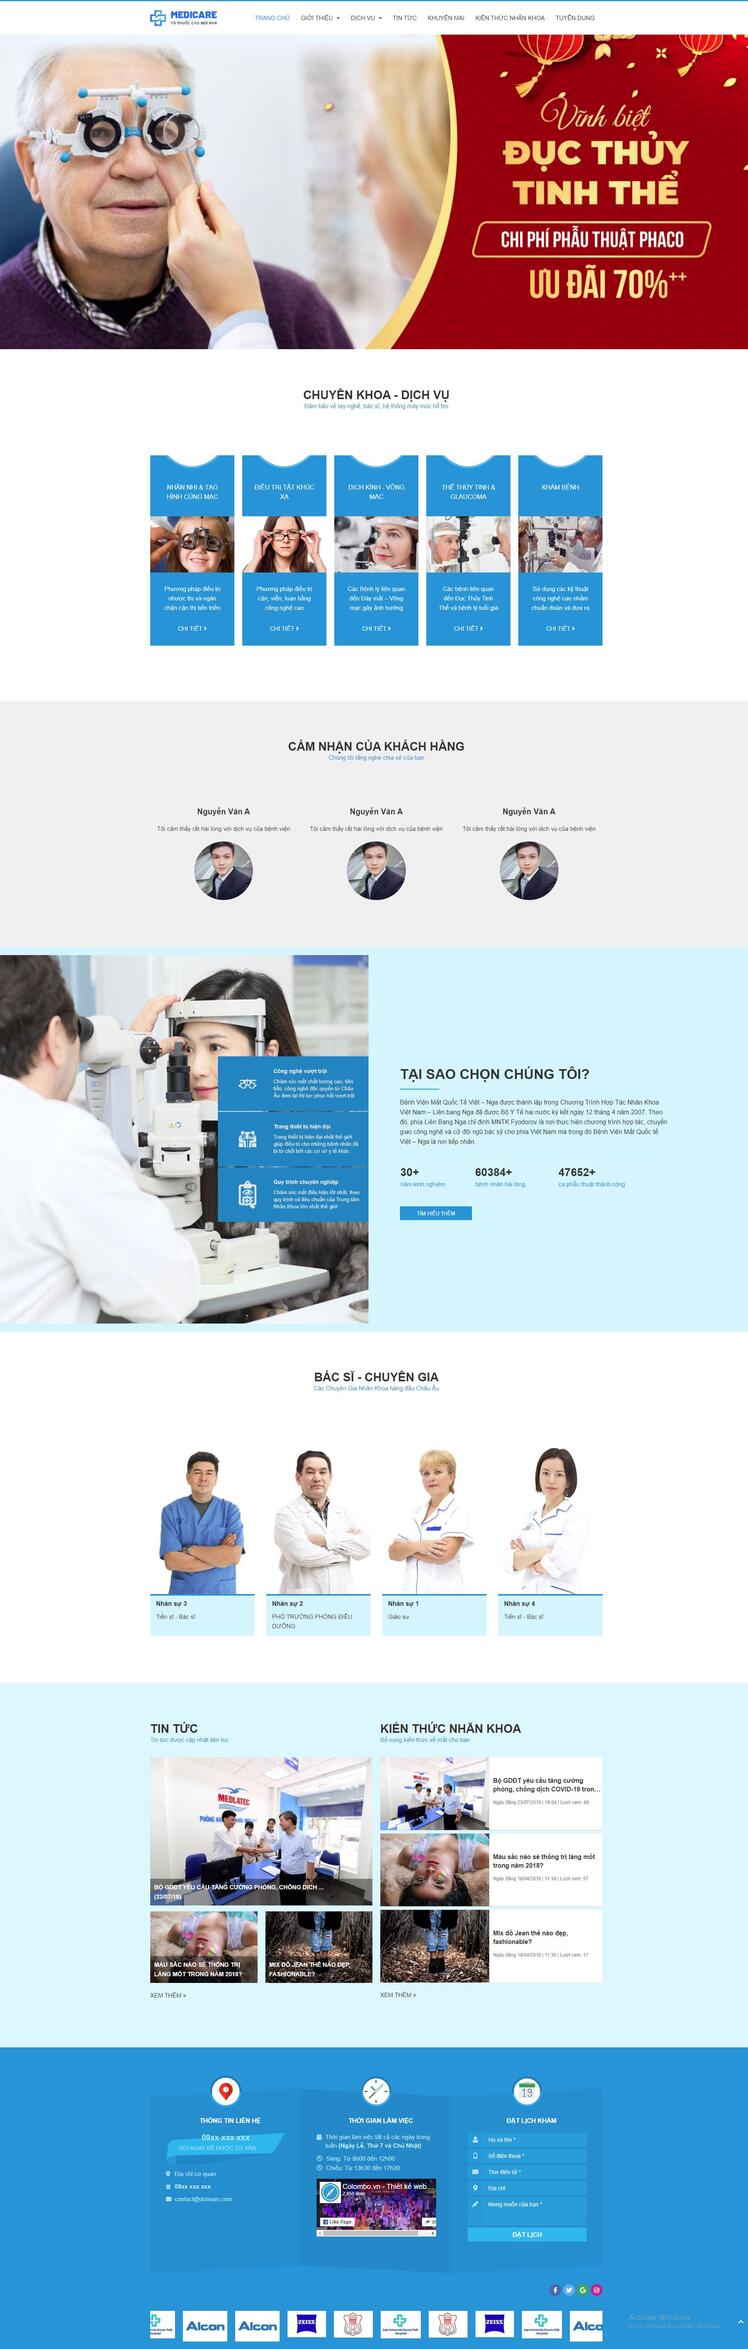 Thiết kế website bệnh viện 48